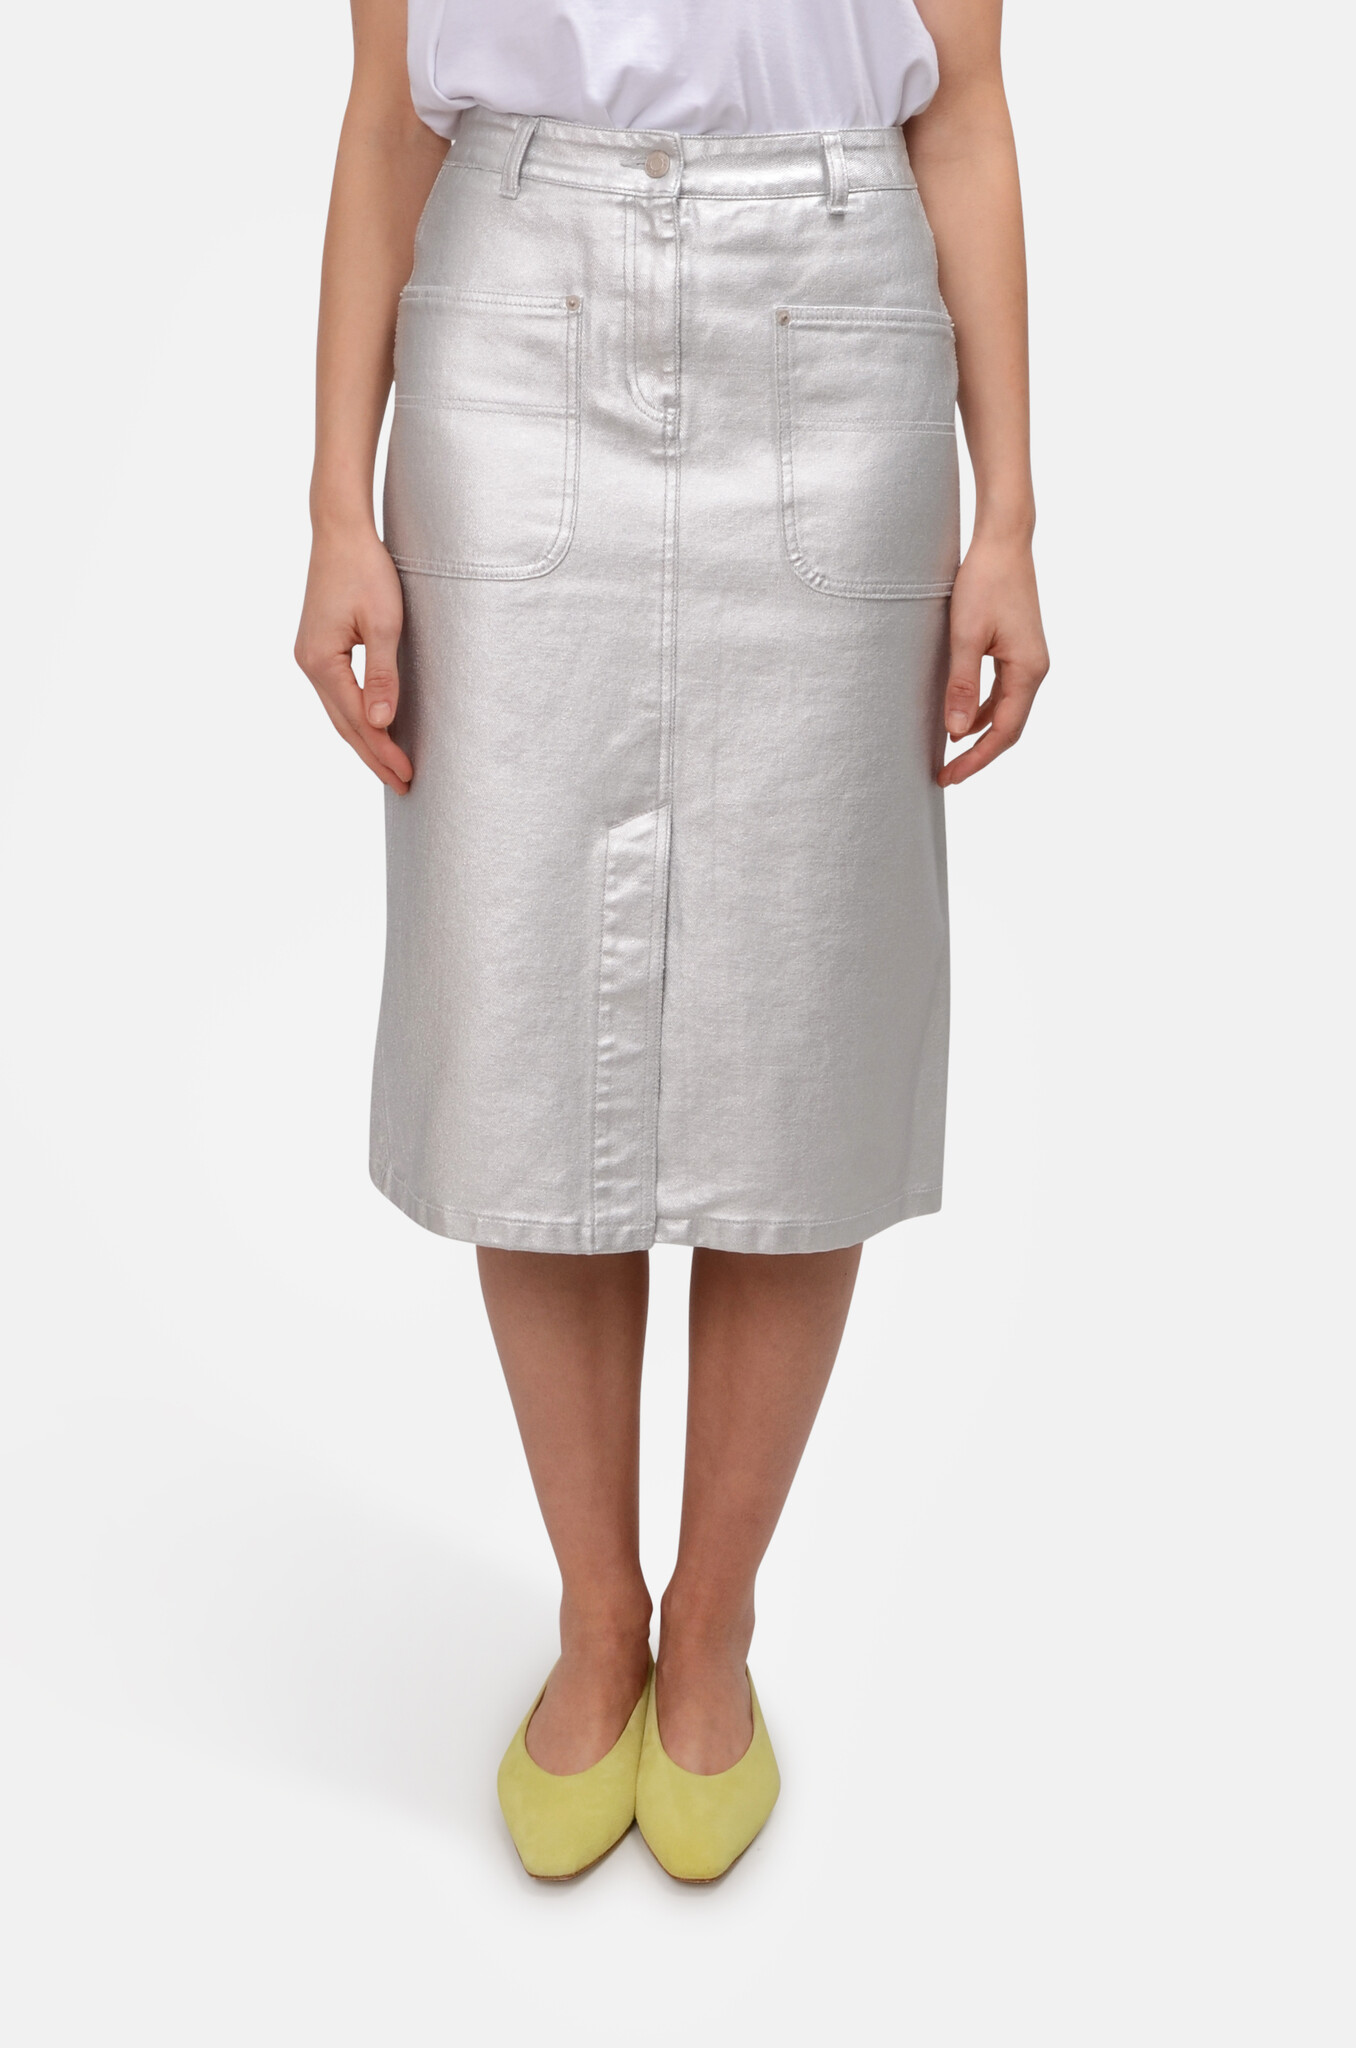 Silver Denim Skirt in Silver-1